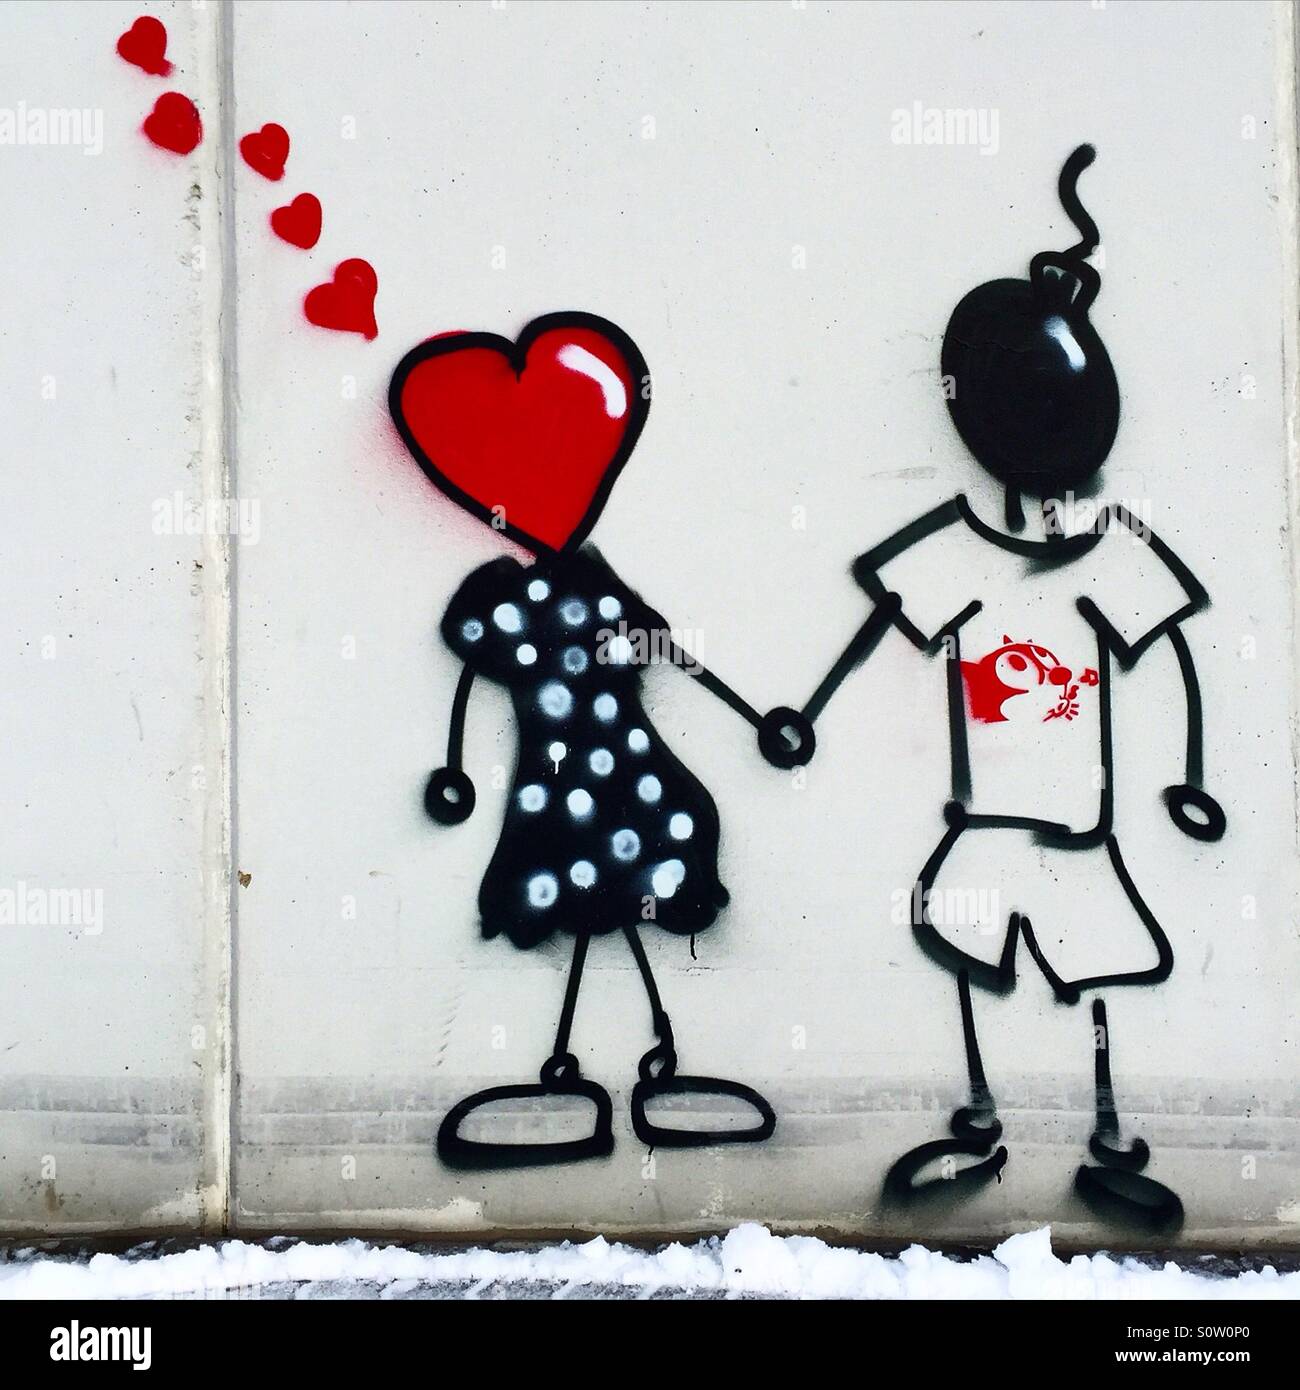 Graffiti mit Liebesbotschaft Stockfoto